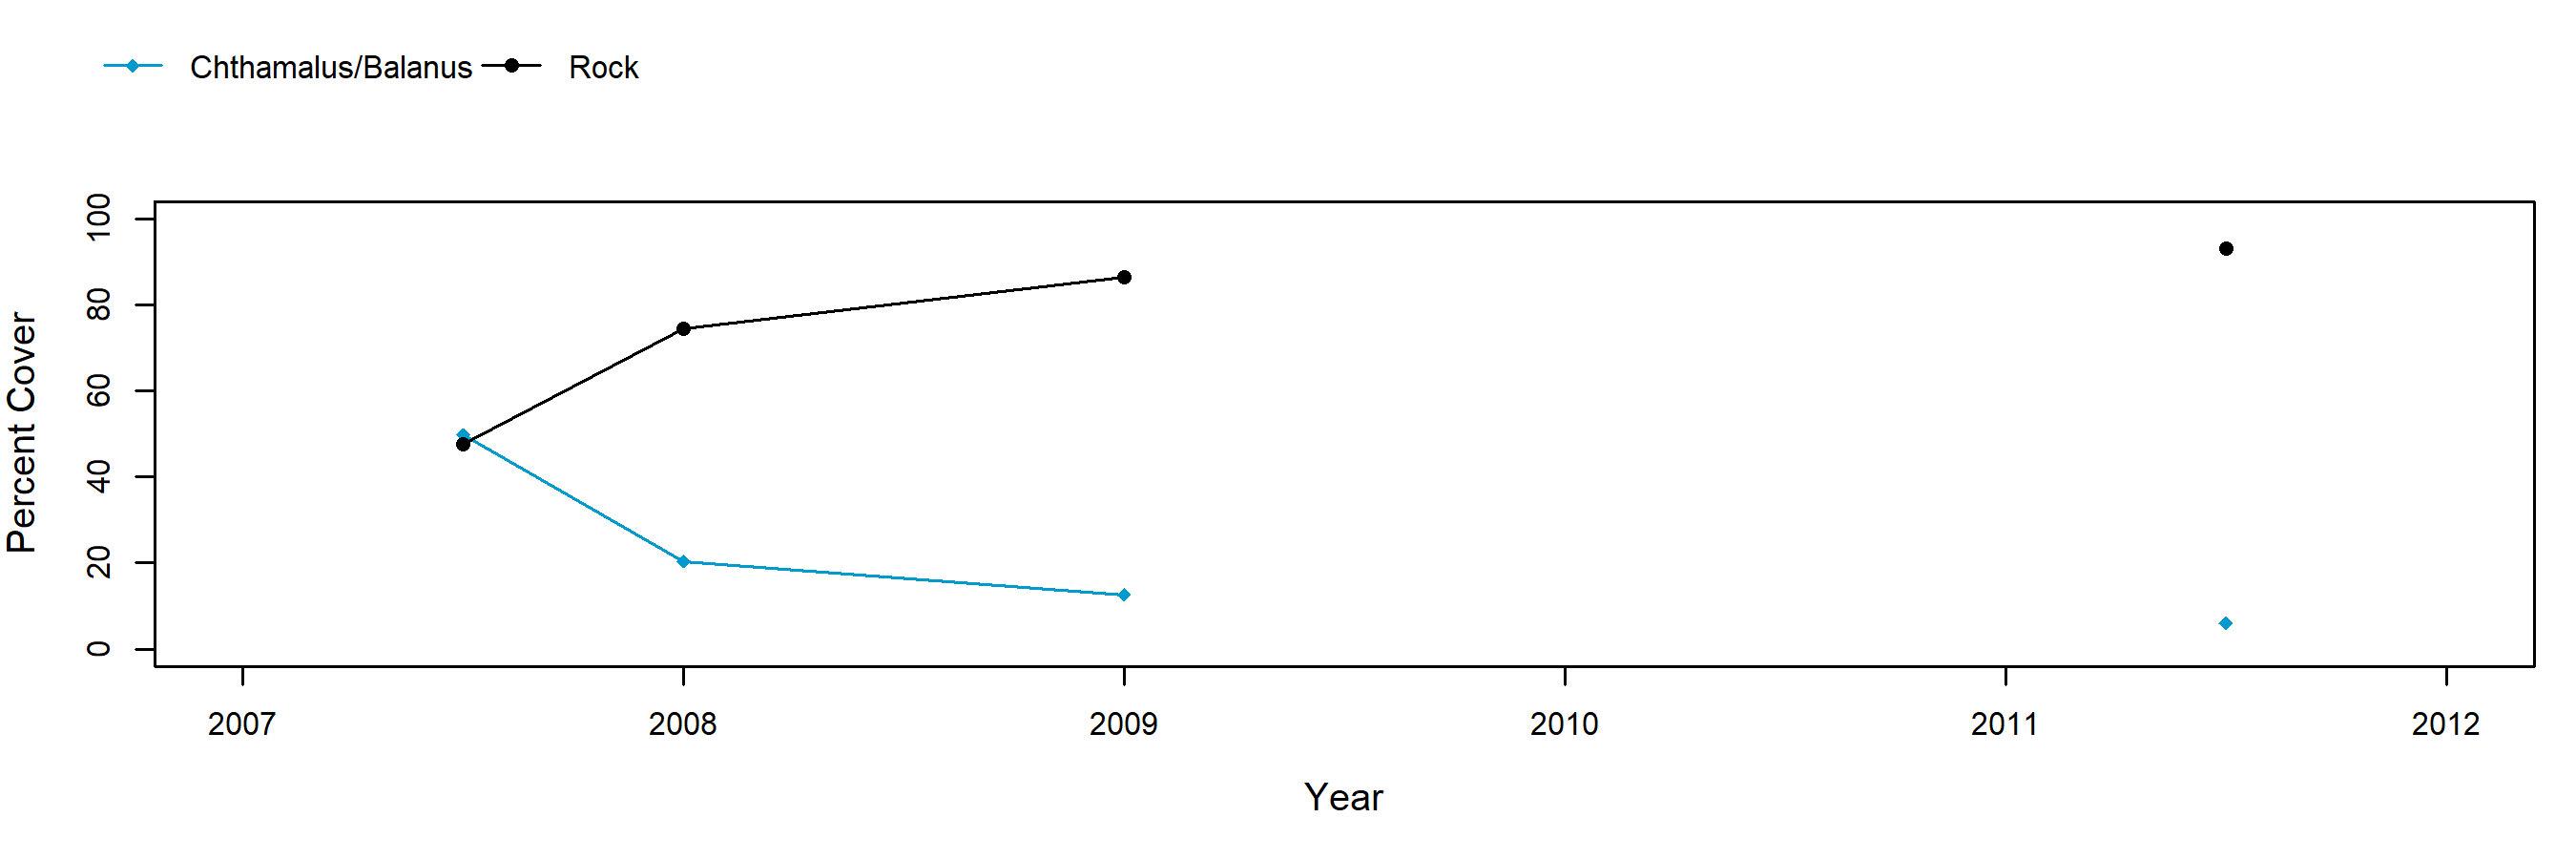 Diablo barnacle trend plot